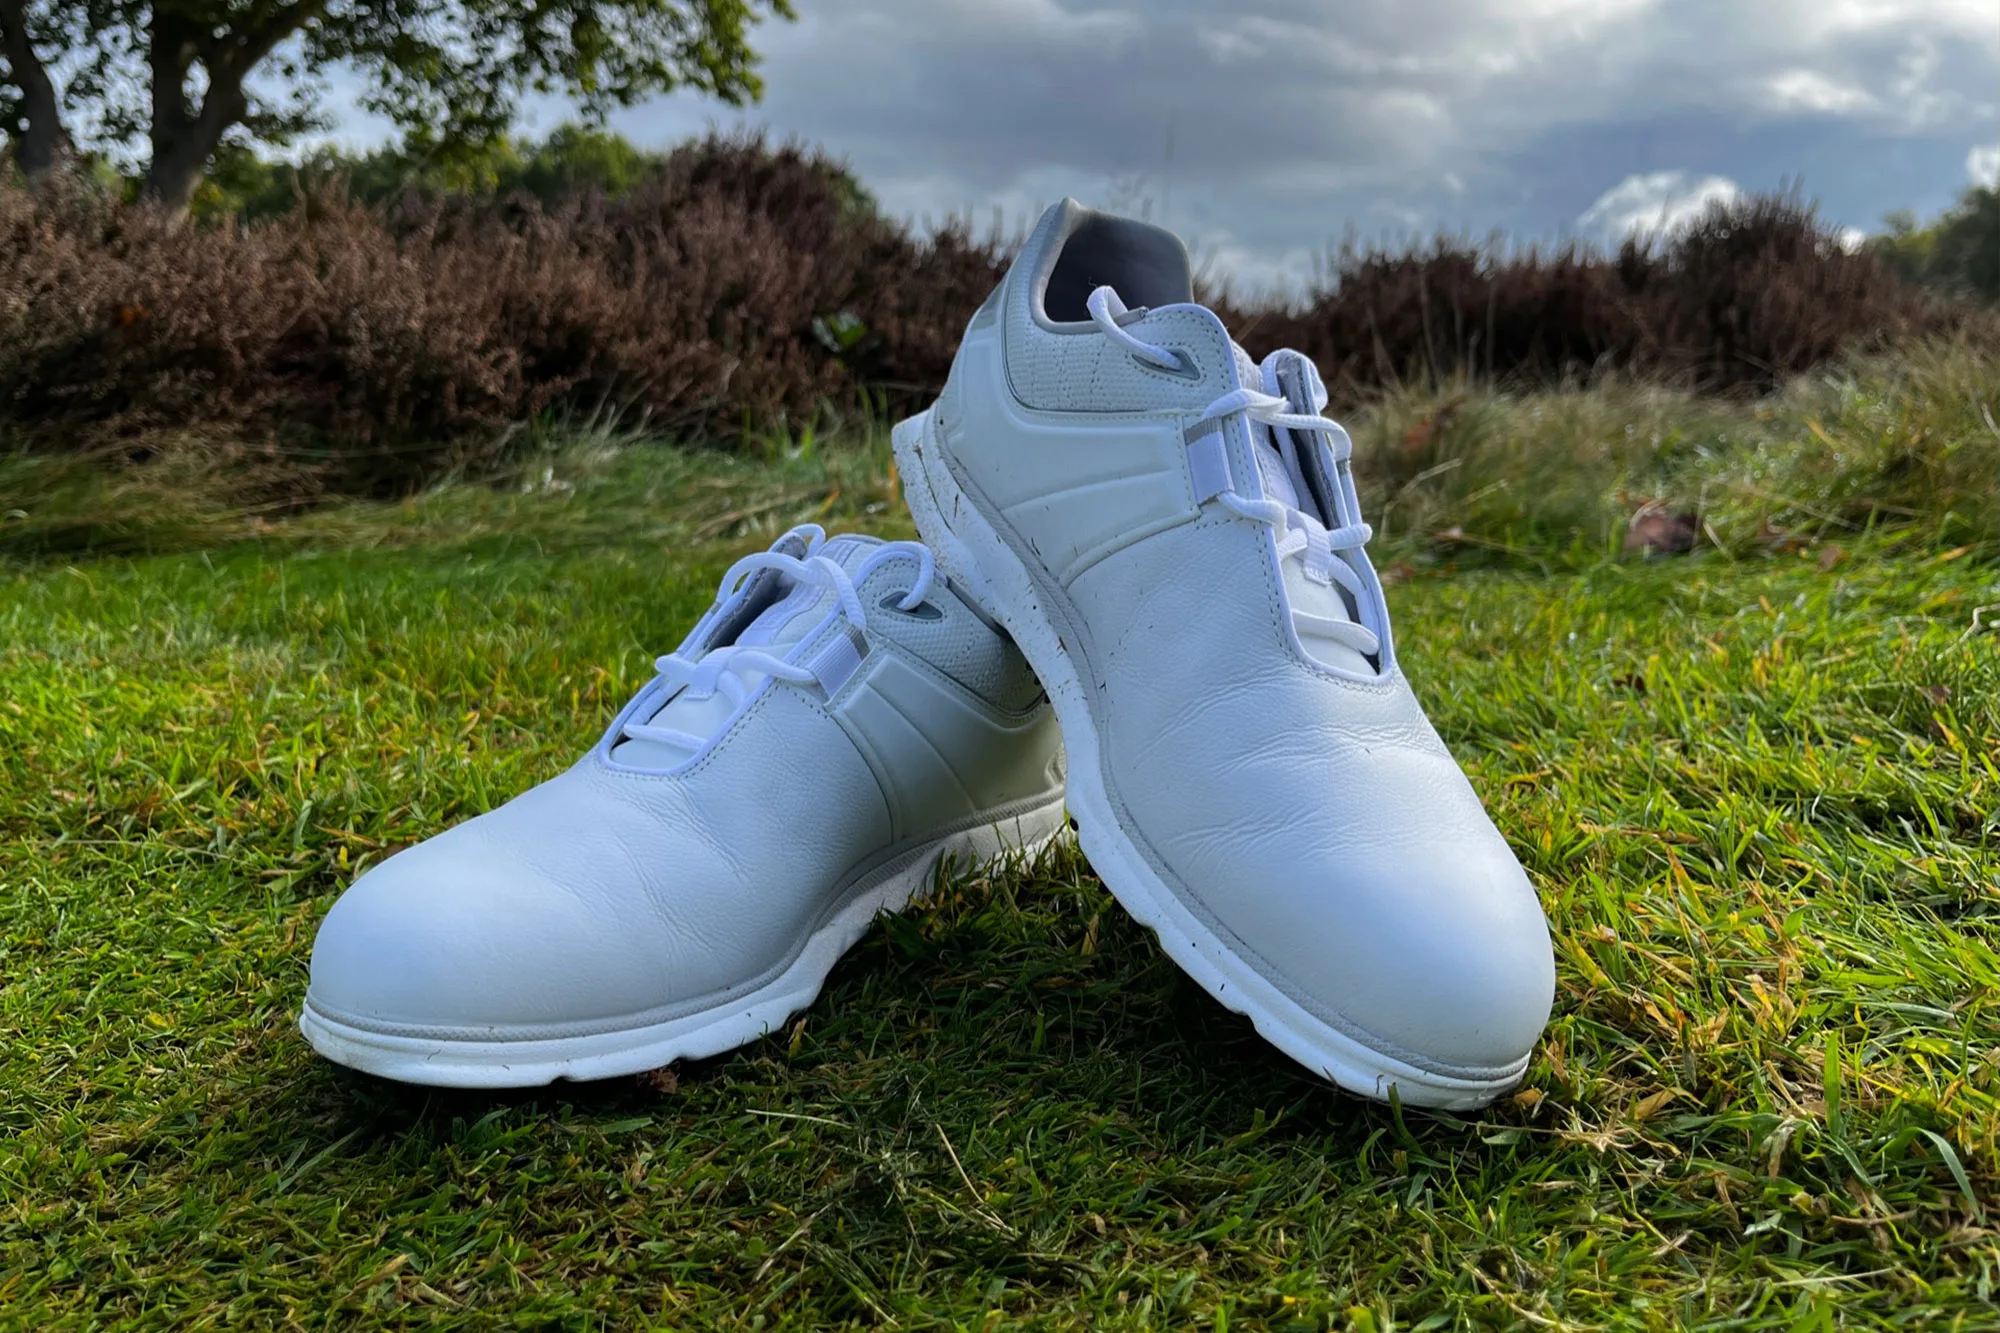 FootJoy Pro SL golf shoes review